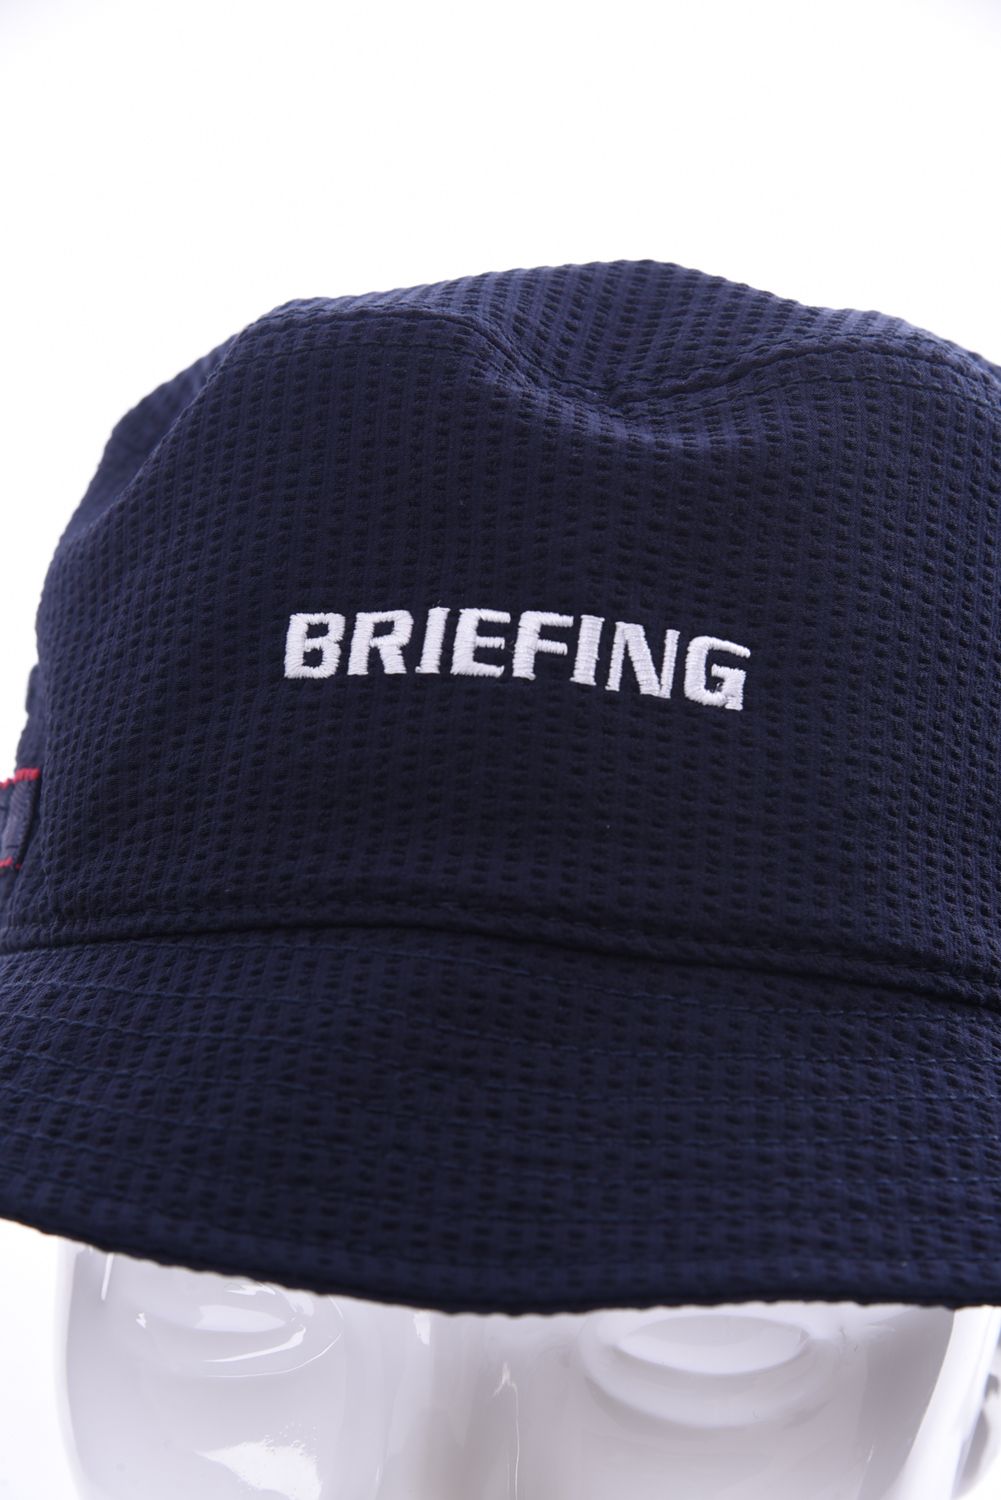 BRIEFING - SEERSUCKER HAT / 刺繍ロゴ シアサッカー バケットハット 